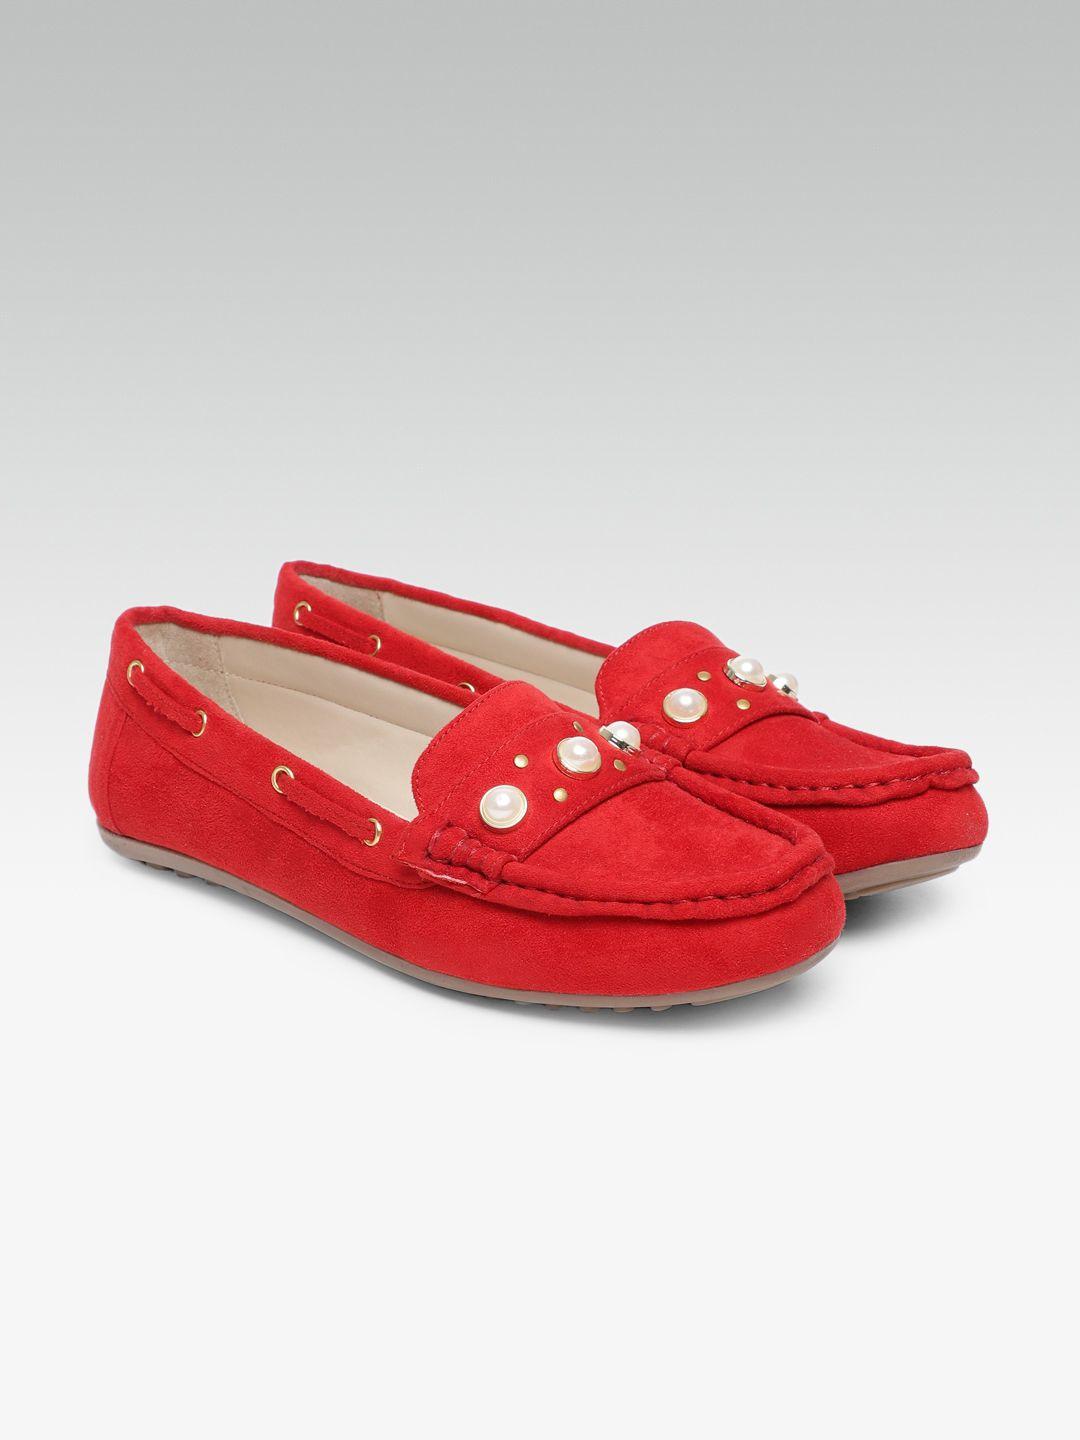 carlton london women red boat shoes